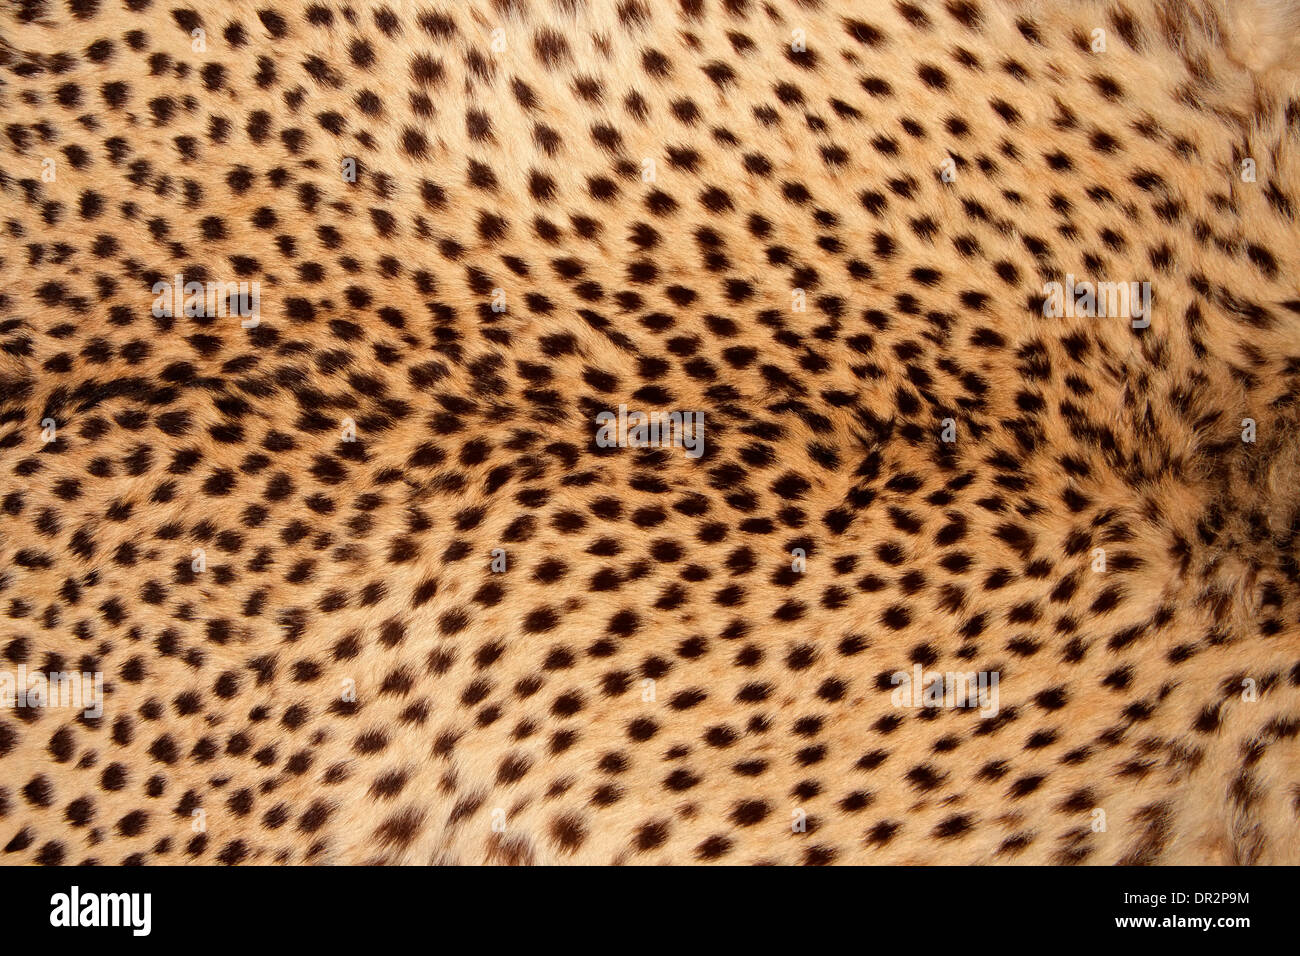 Close-up view of the skin of a cheetah (Acinonyx jubatus) Stock Photo